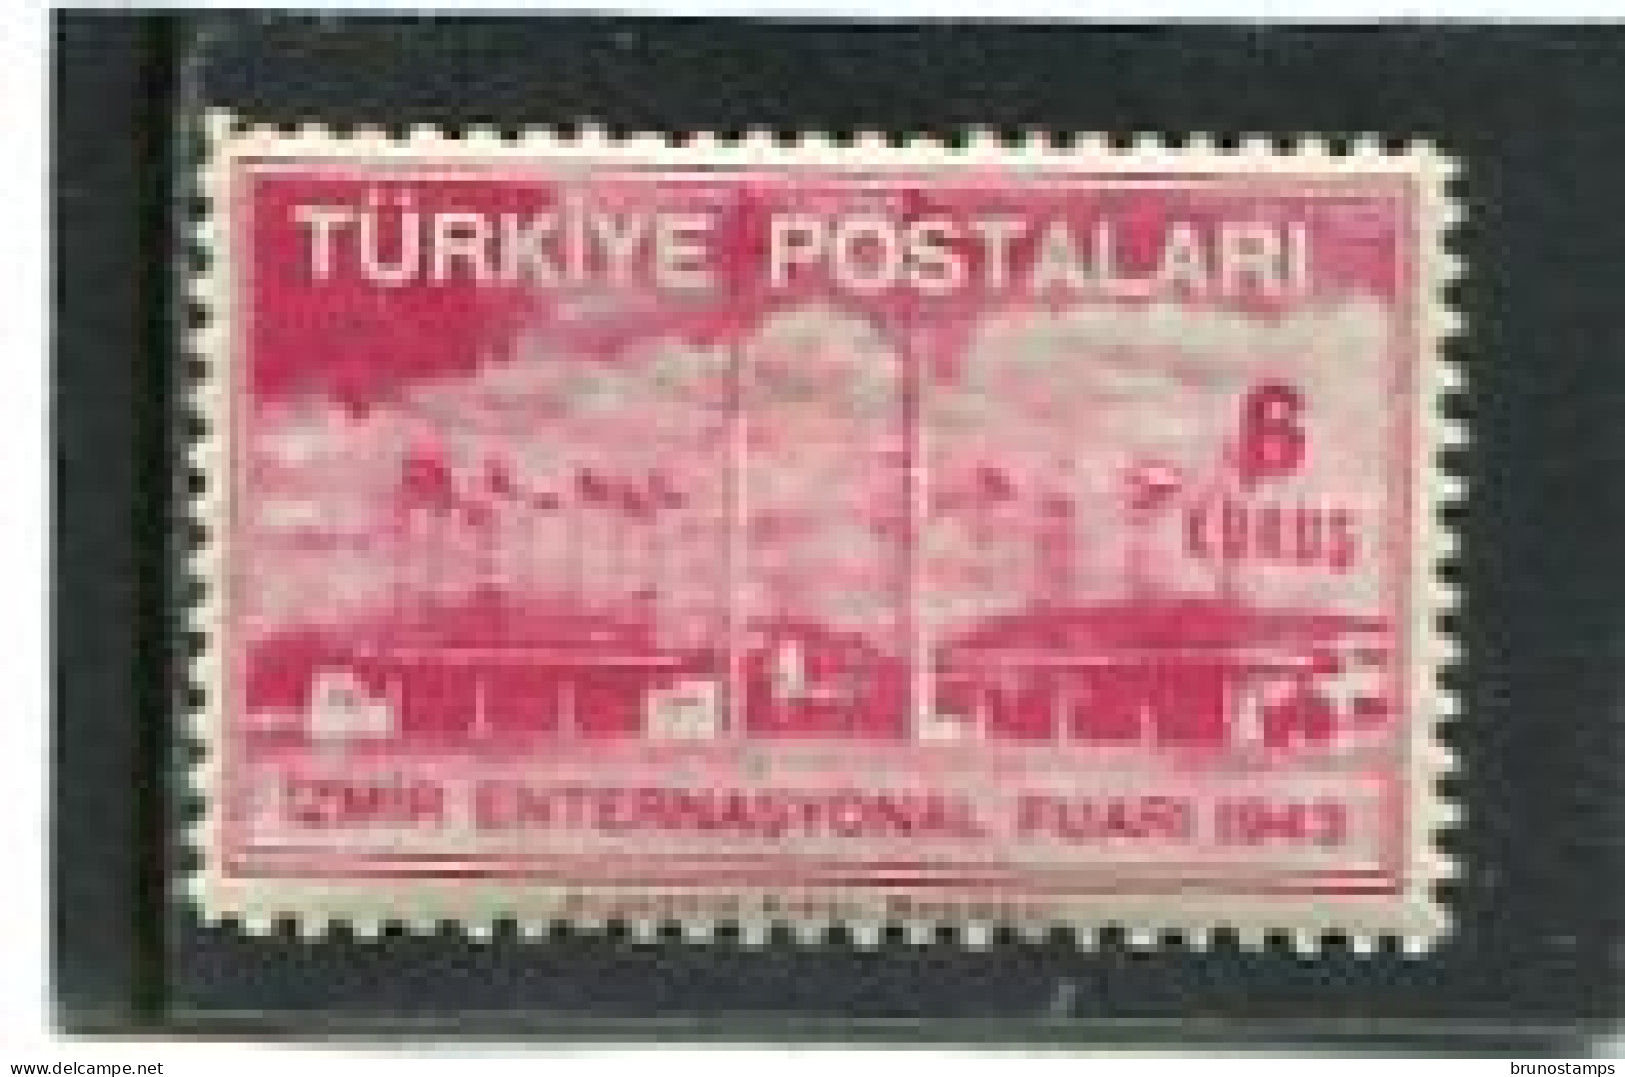 TURKEY/TURKIYE - 1943   6k  EXPO  MINT NH - Neufs